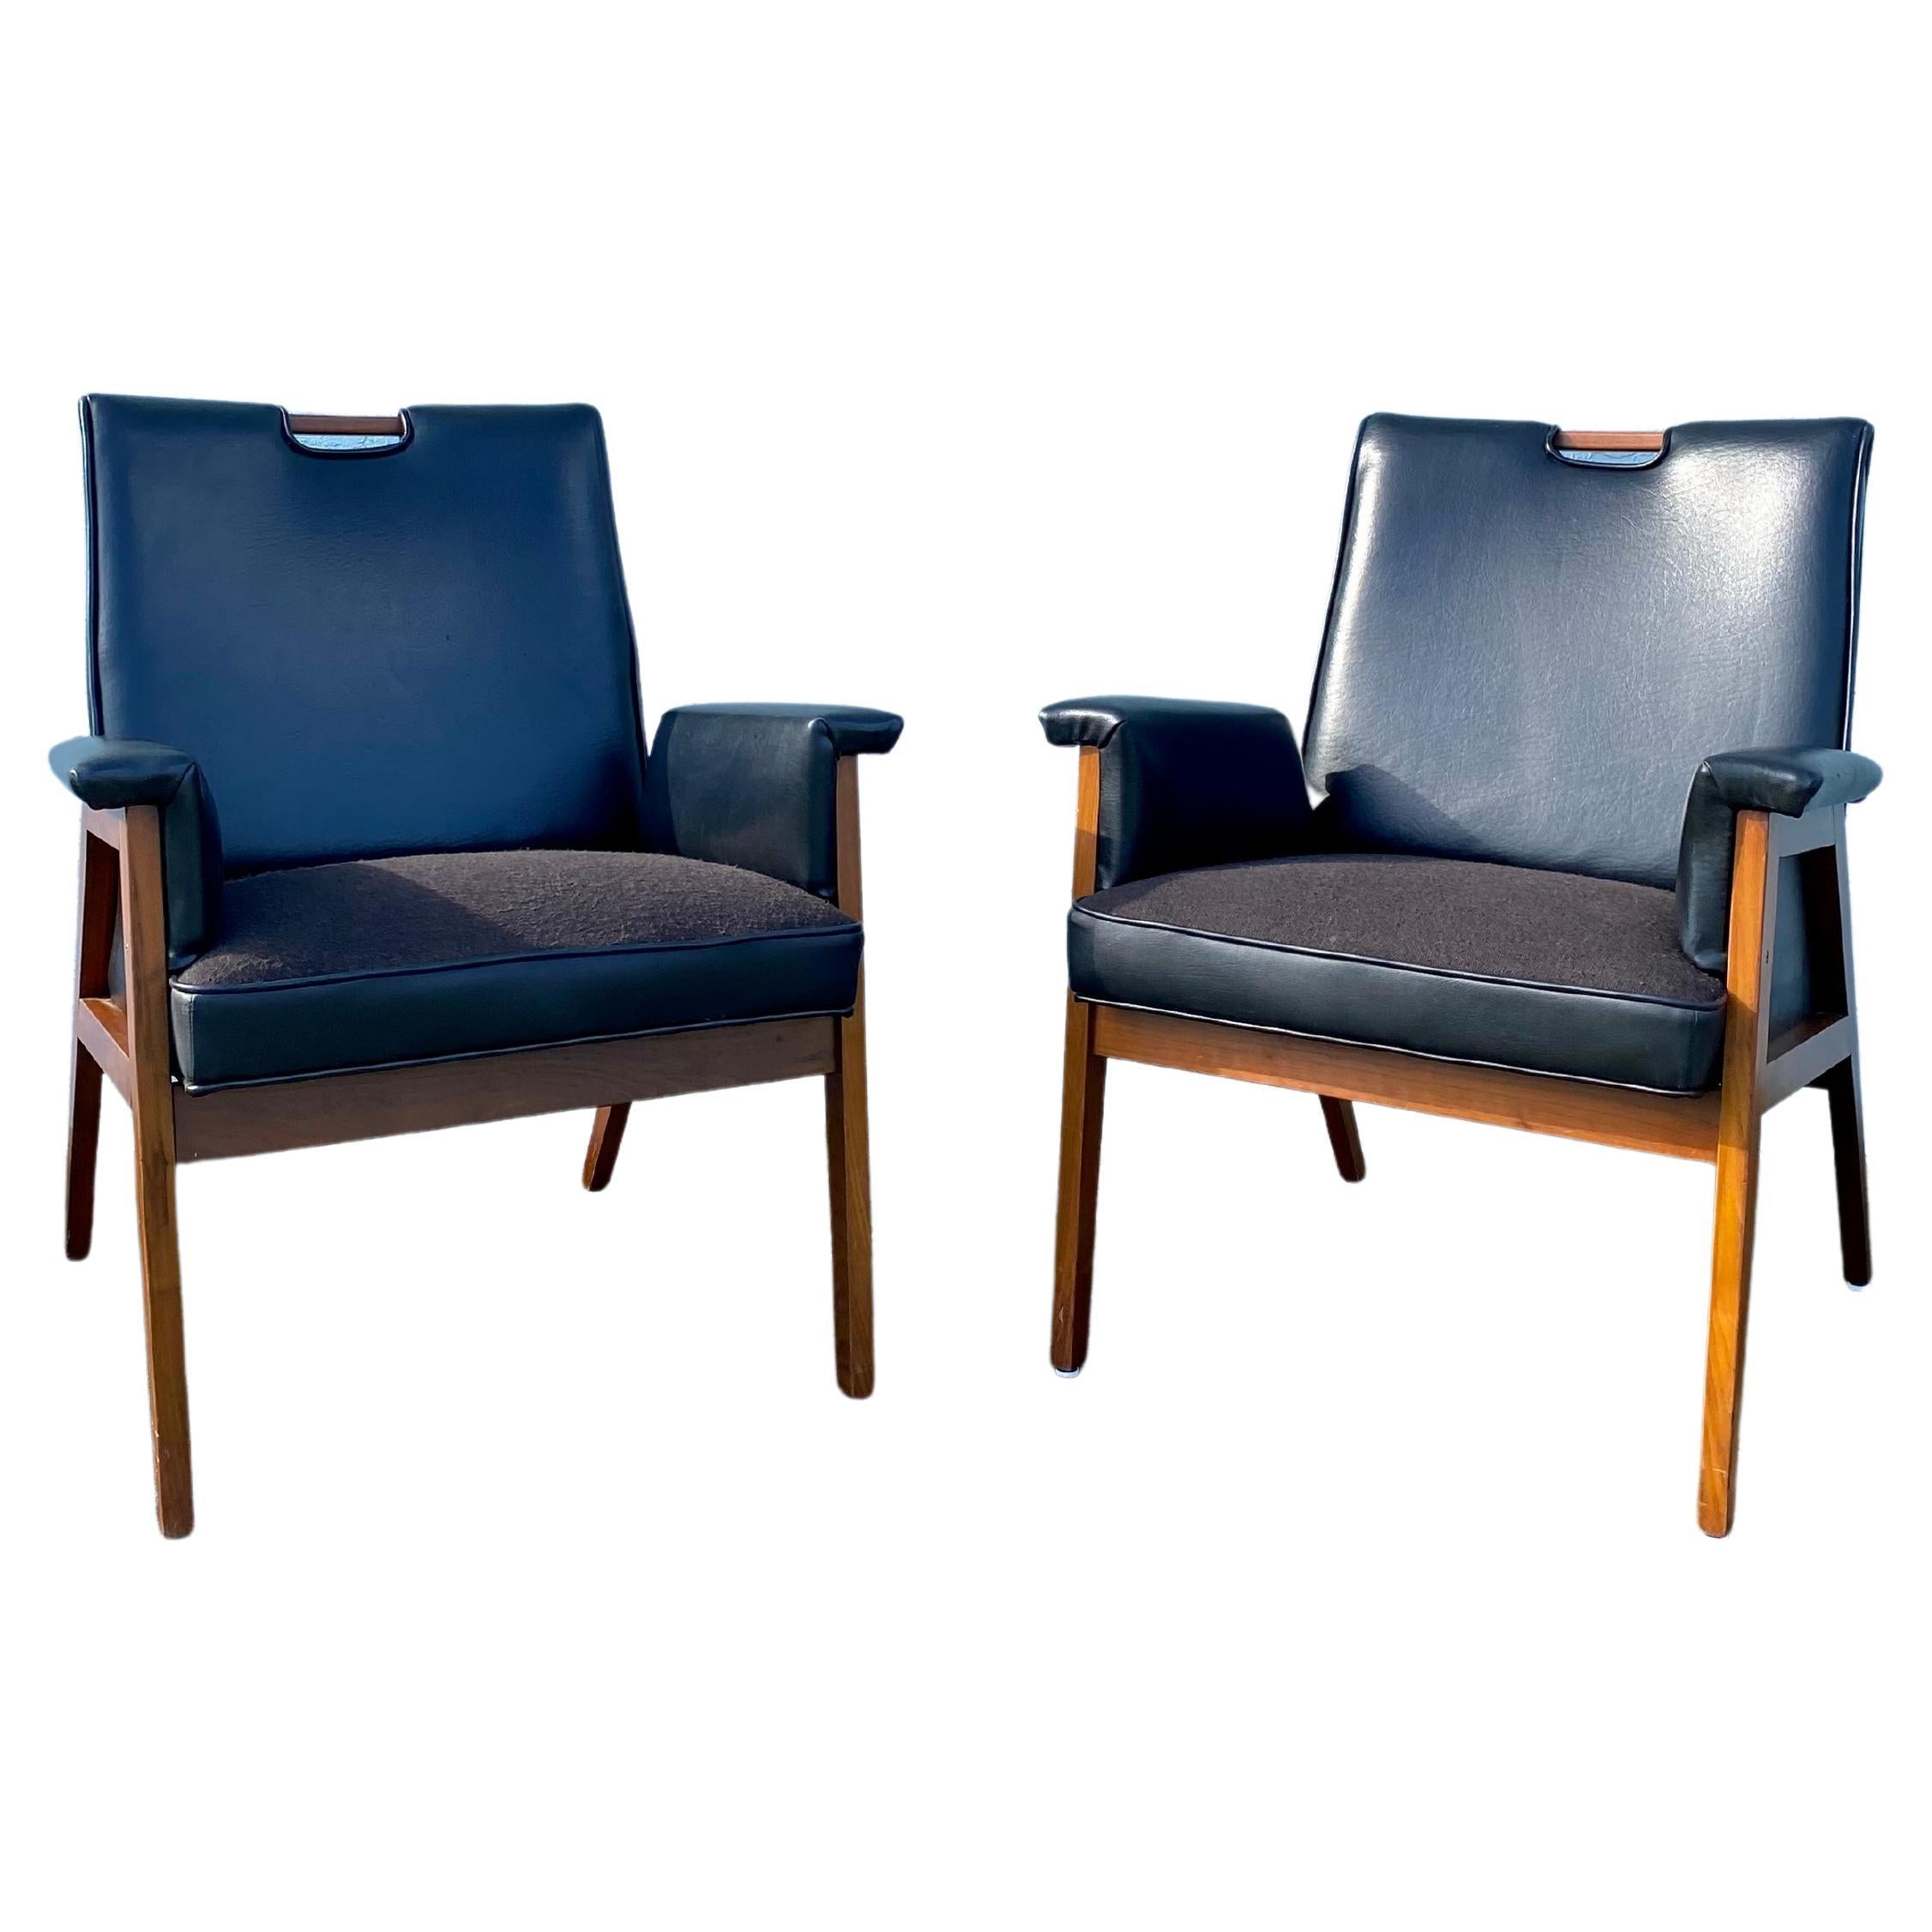 1960 Finn Julh Danish Walnut Leather Sculptural Chairs, Set of 2